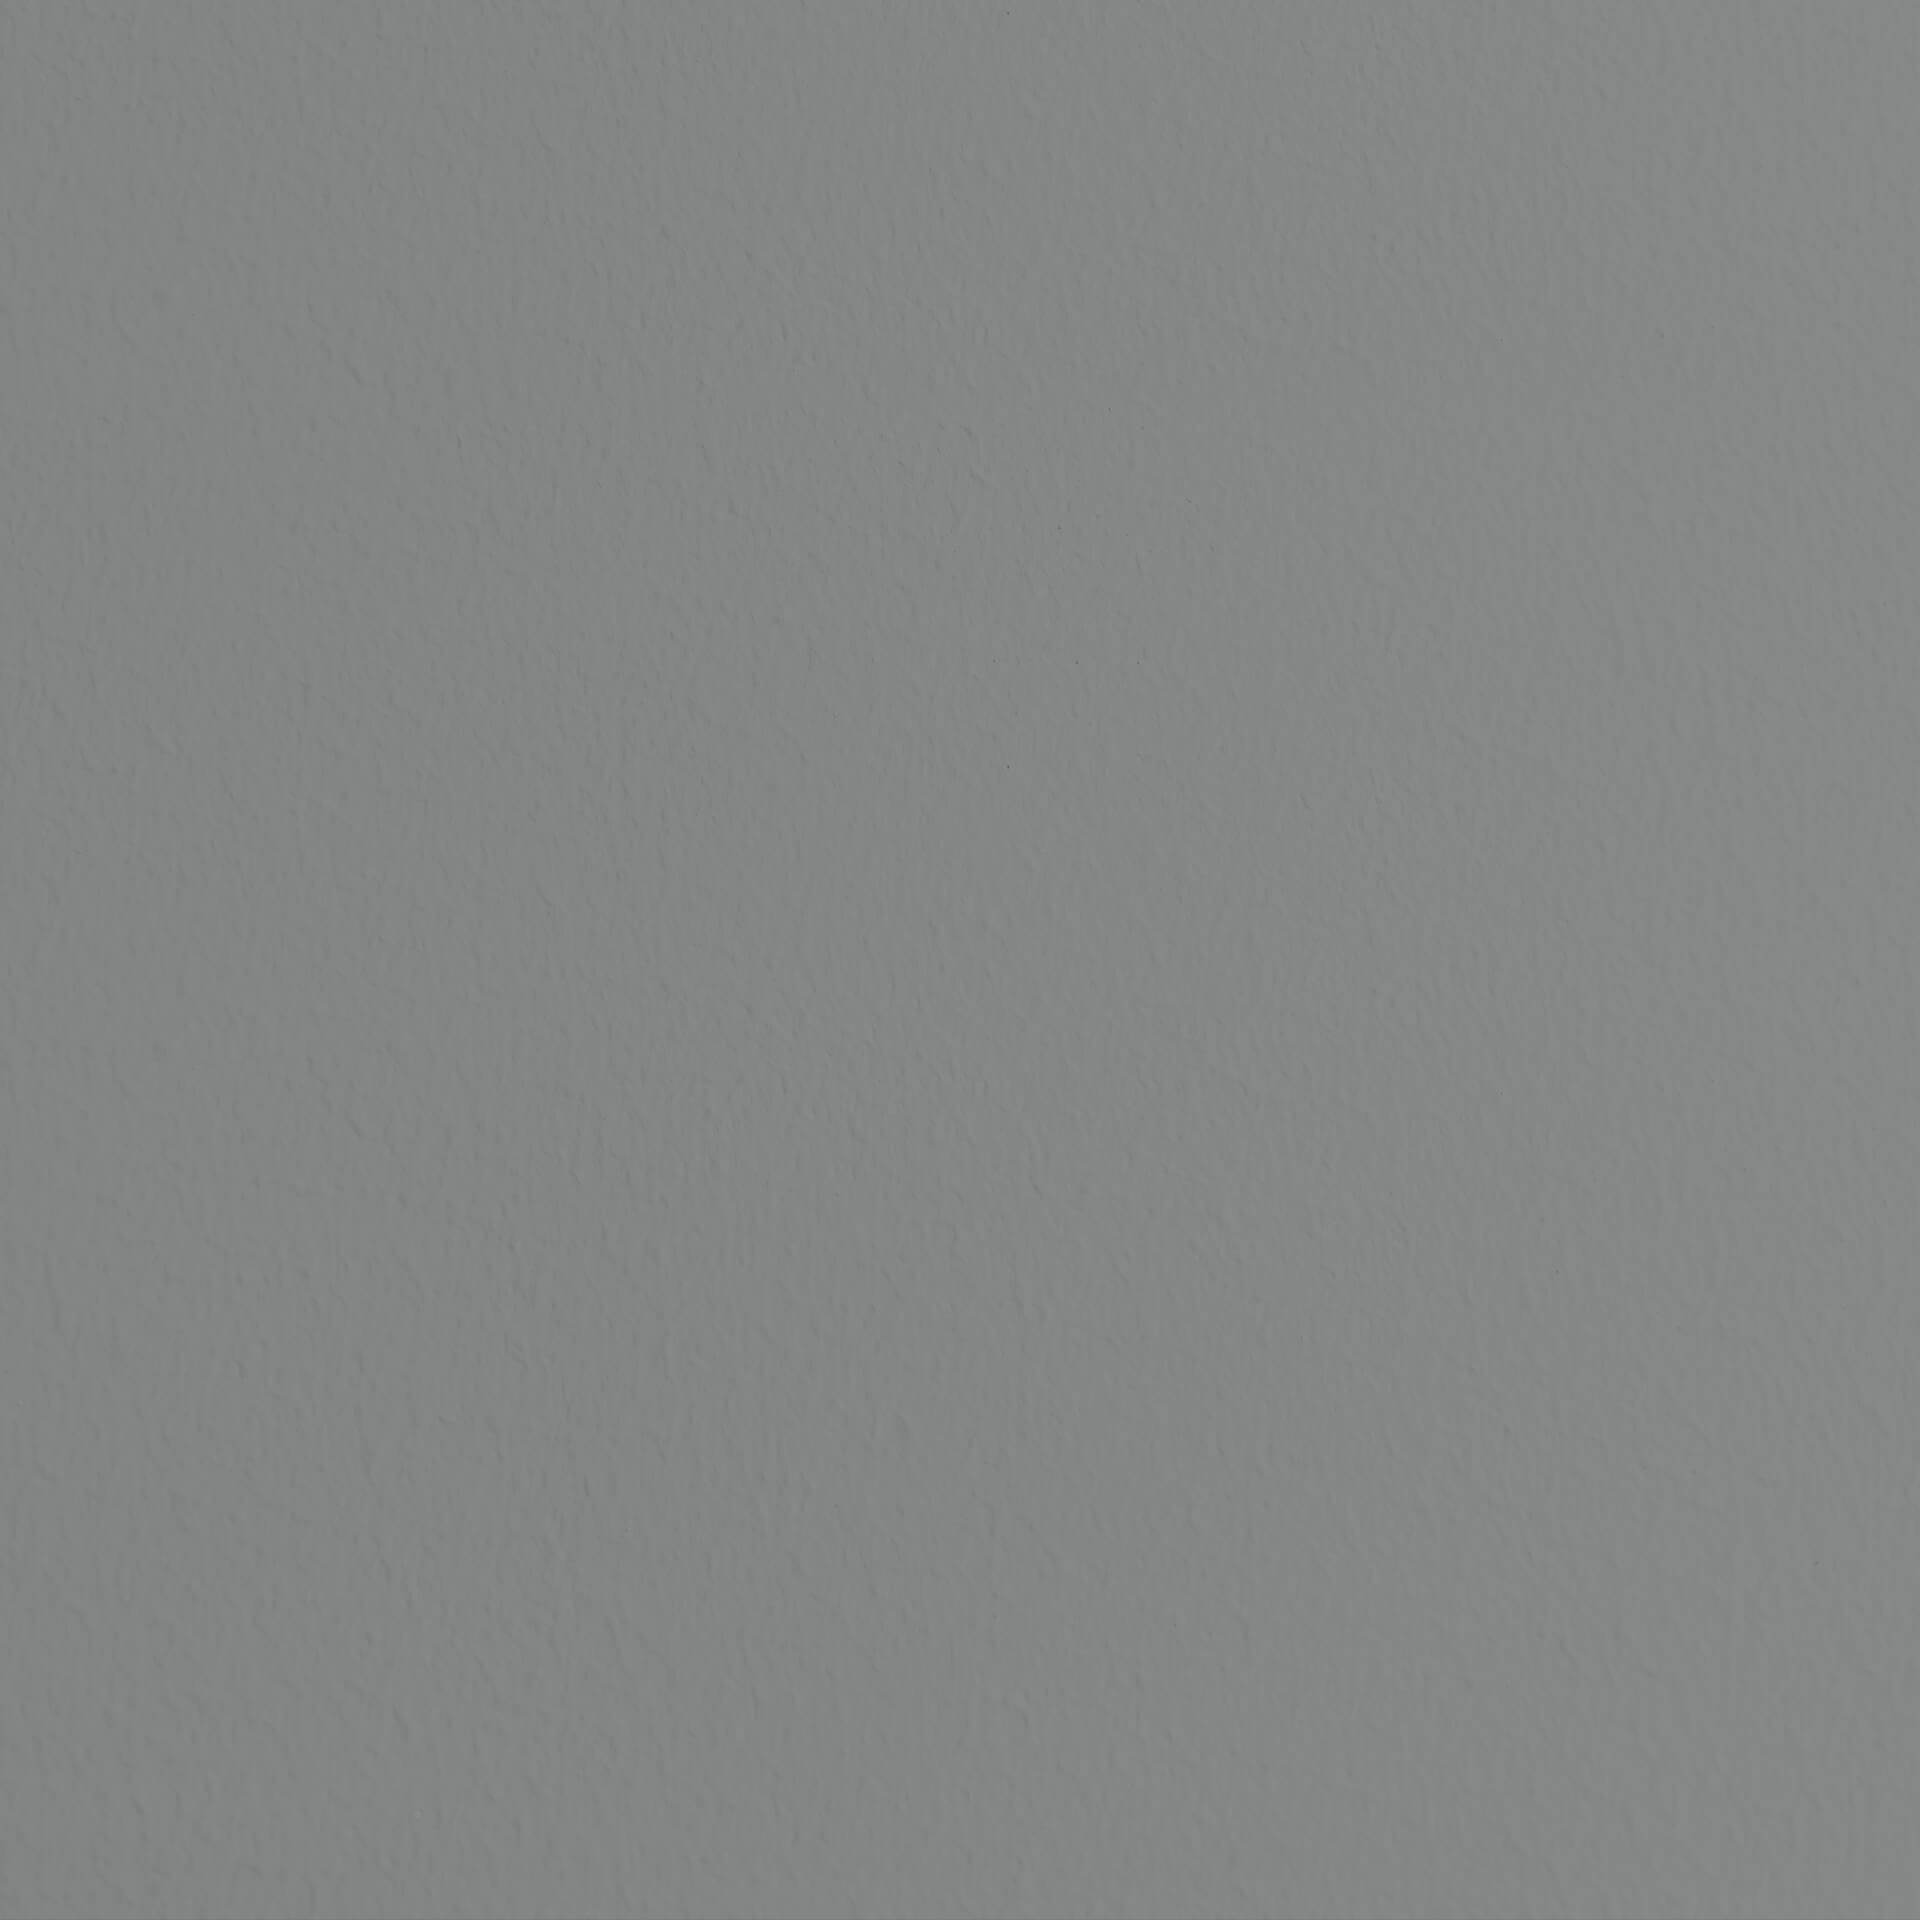 CosyColours Calm Grey Kreidefarbe - 750ml, Lack Matt